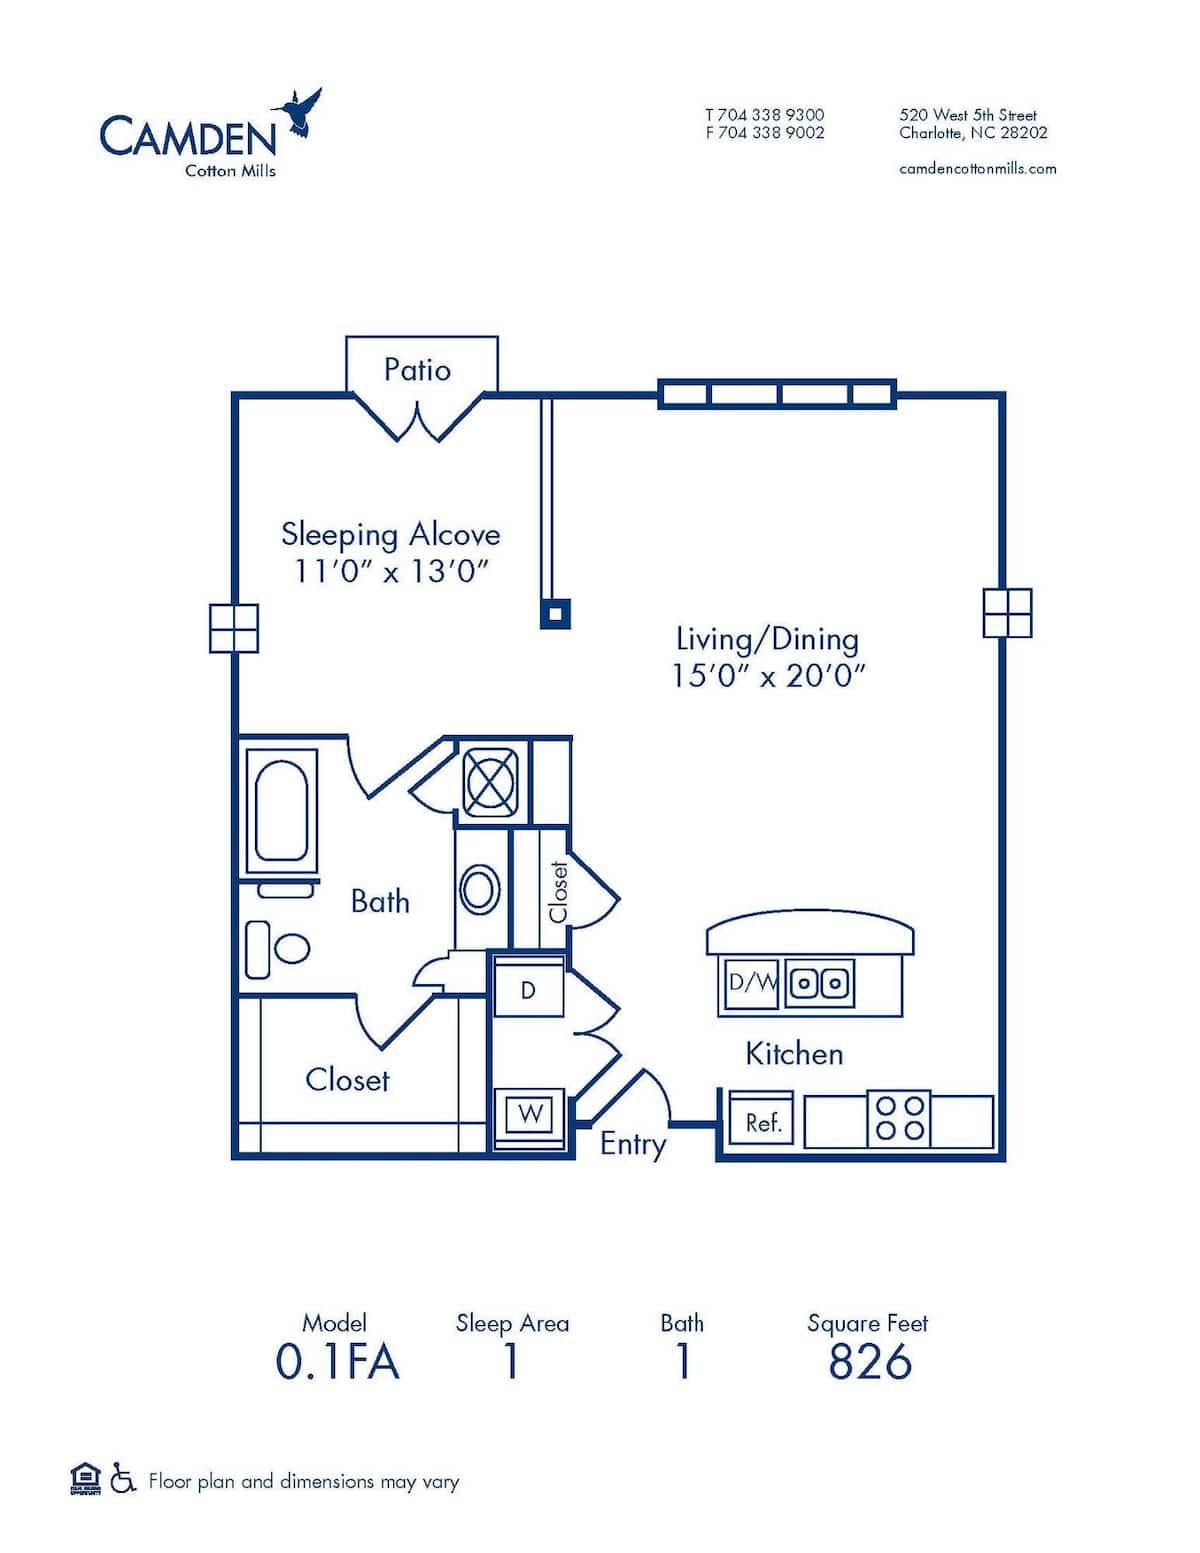 Floorplan diagram for 0.1FA, showing Studio